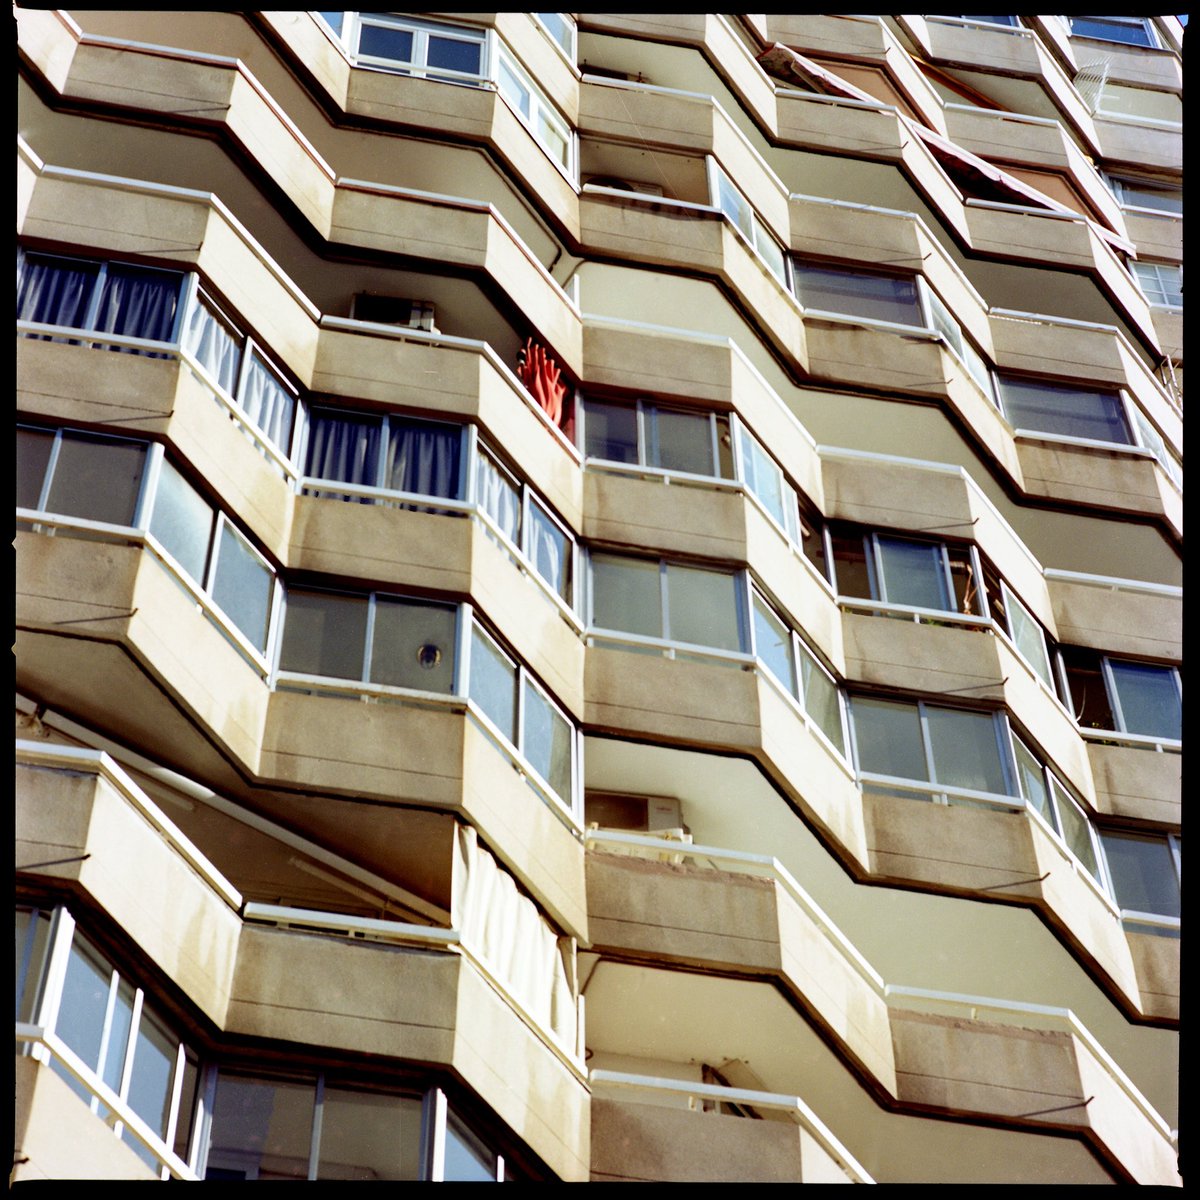 Façades, Barcelona.
@Hasselblad 500CM 
@Kodak #tmax100 & #portra400